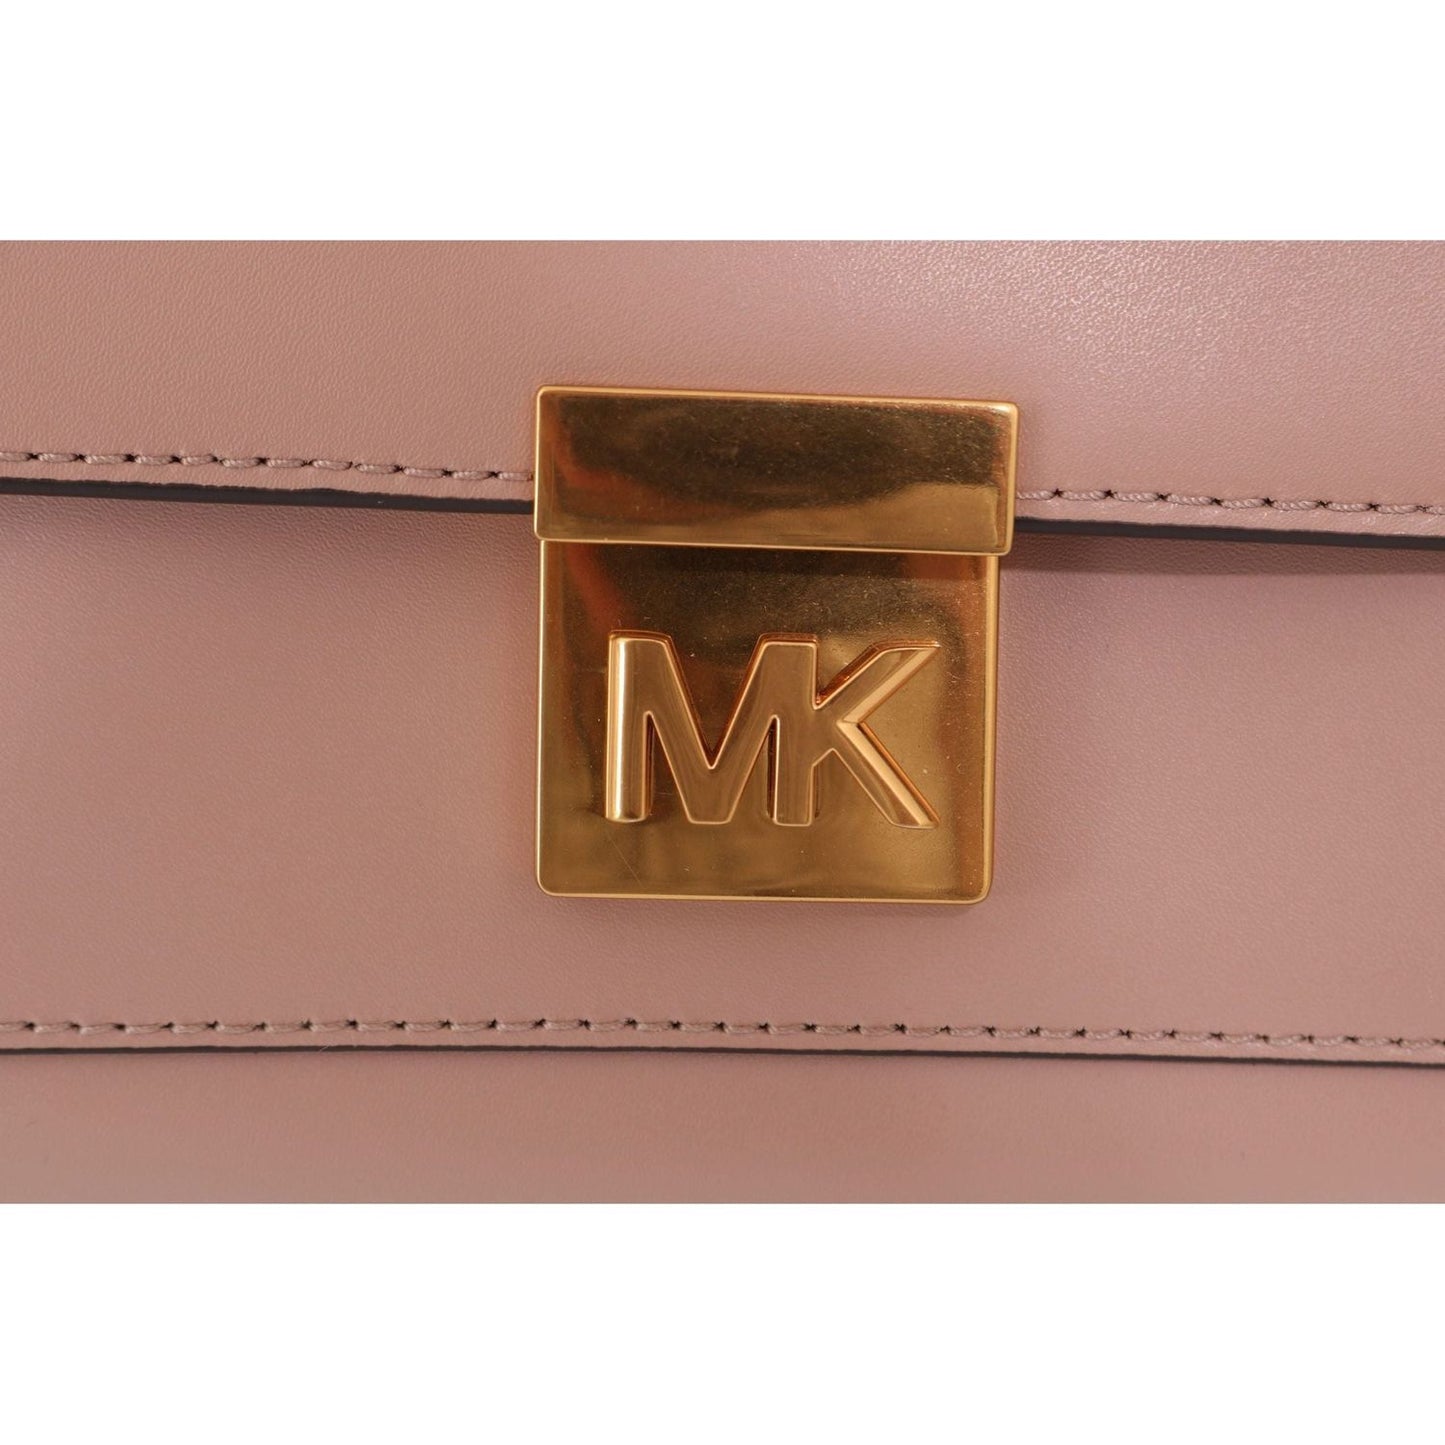 Michael Kors Elegant Pink Leather Mindy Shoulder Bag WOMAN HANDBAG pink-mindy-leather-shoulder-bag